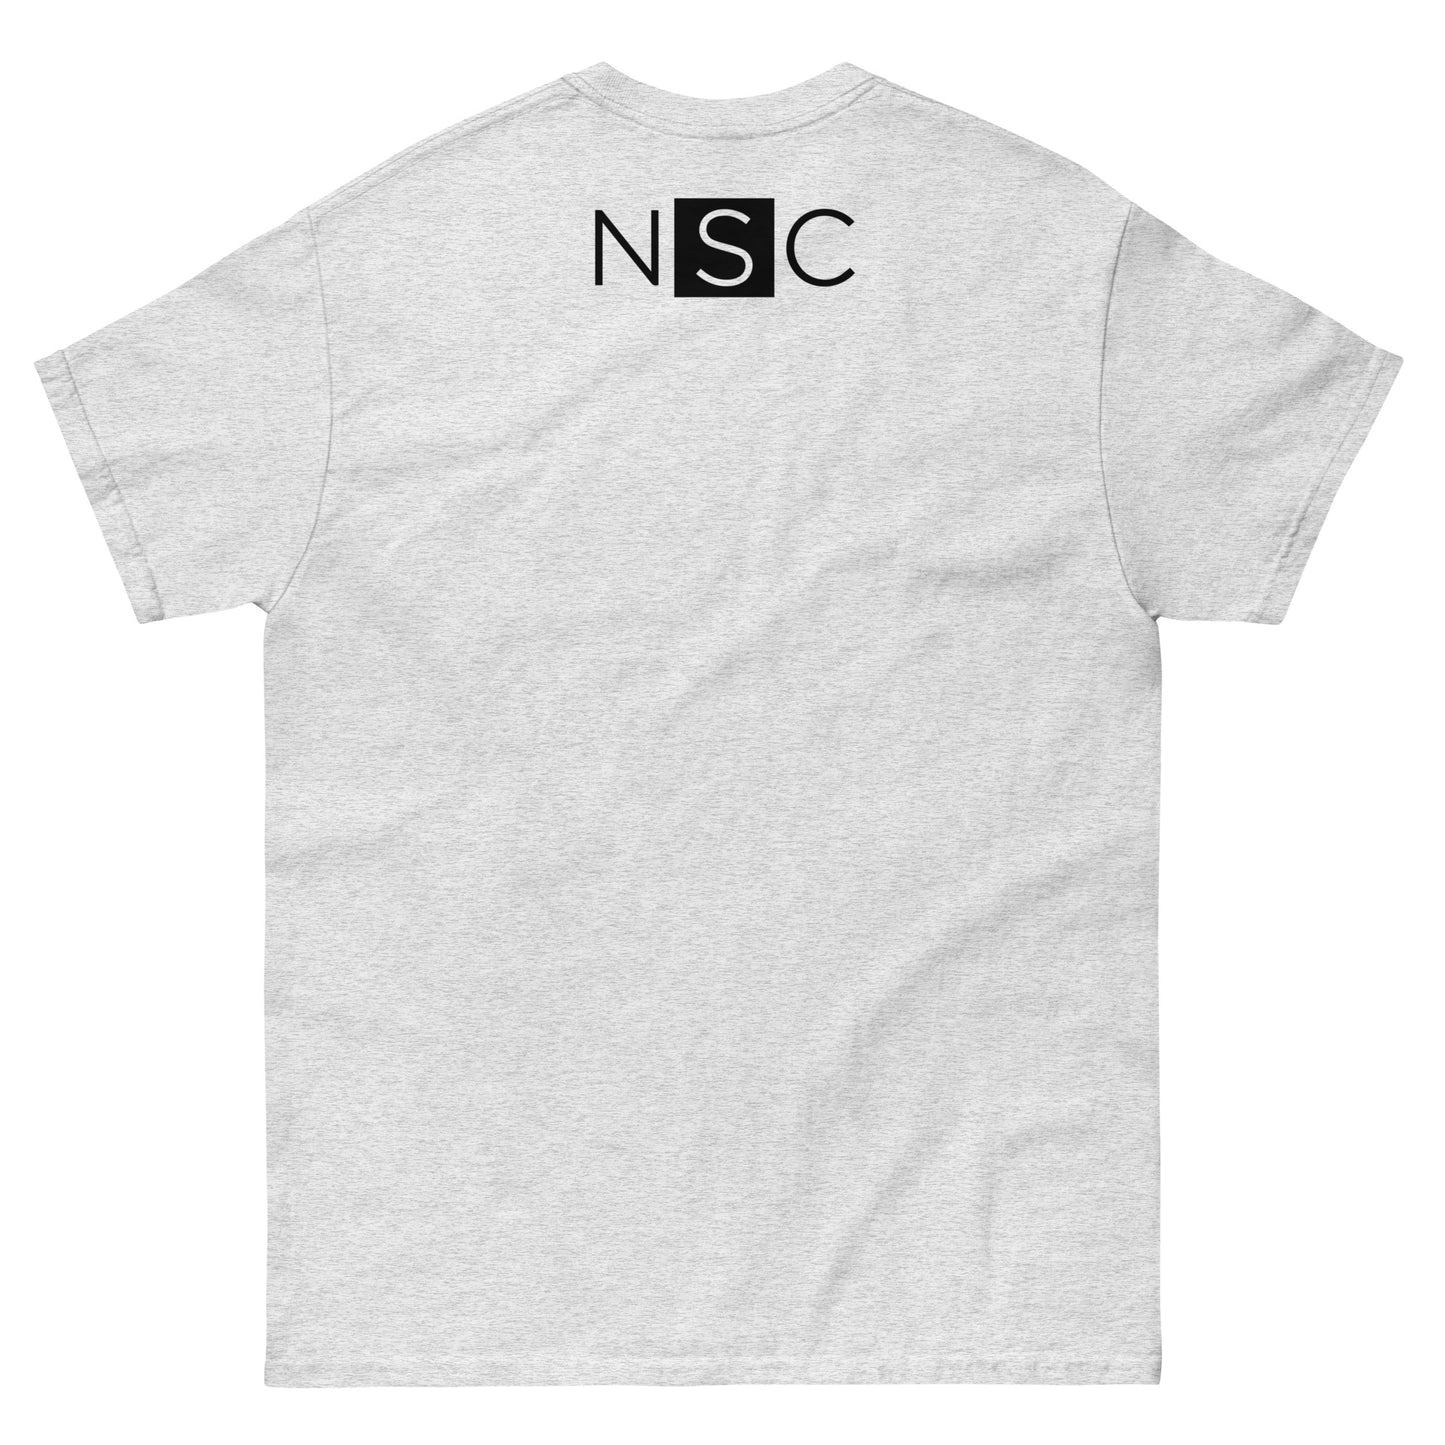 Nashville Sampling Co (NSC) Men's classic tee